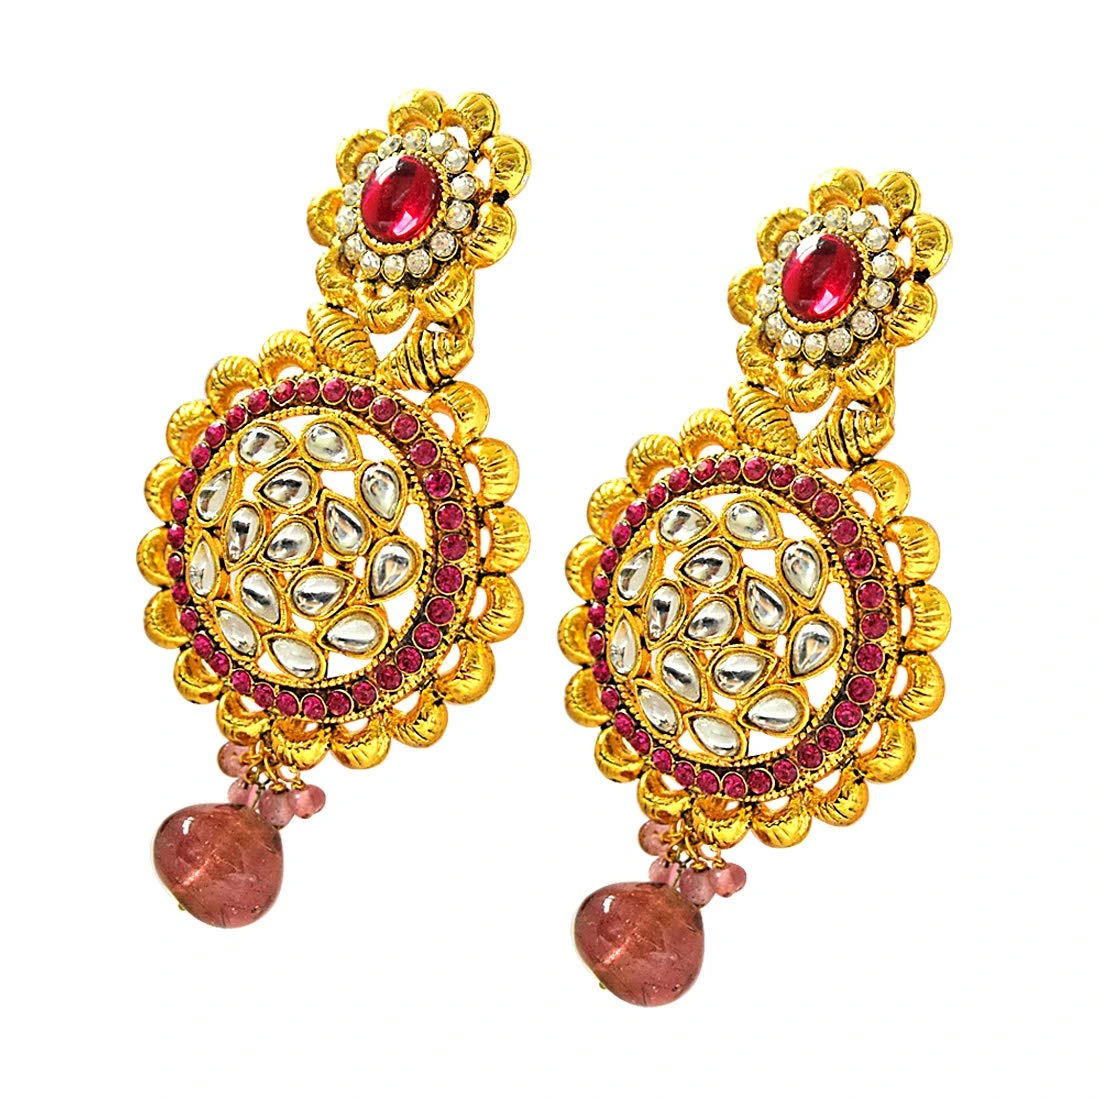 Beautiful Pink & White Coloured Stone & Gold Plated Round Shaped Chandbali Earrings